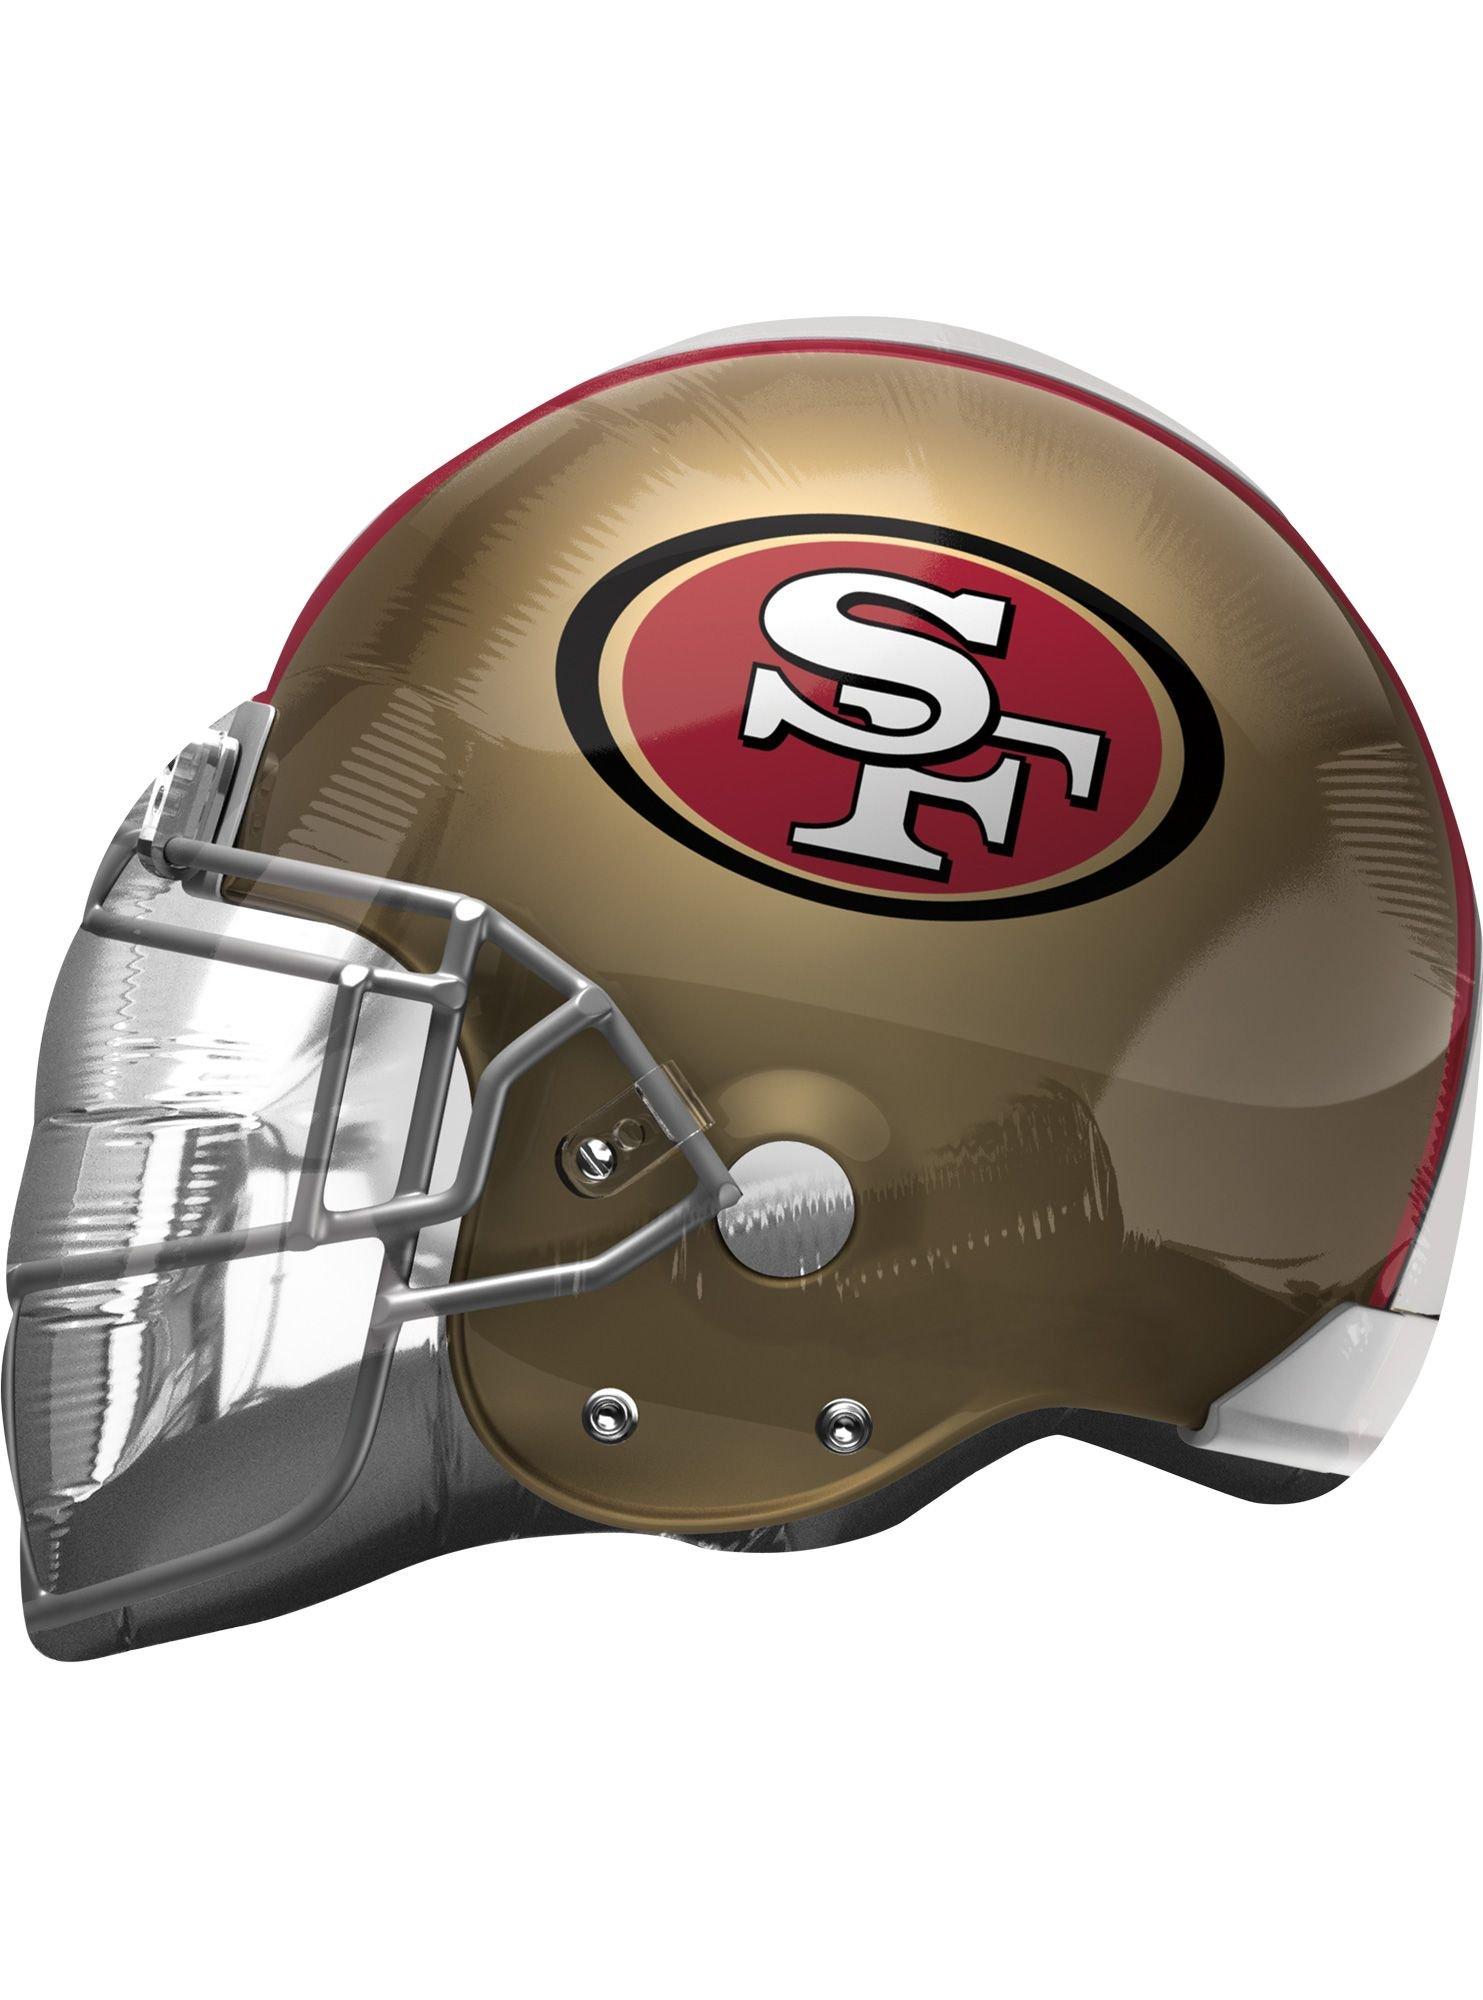 San Francisco 49ers Balloon - Helmet